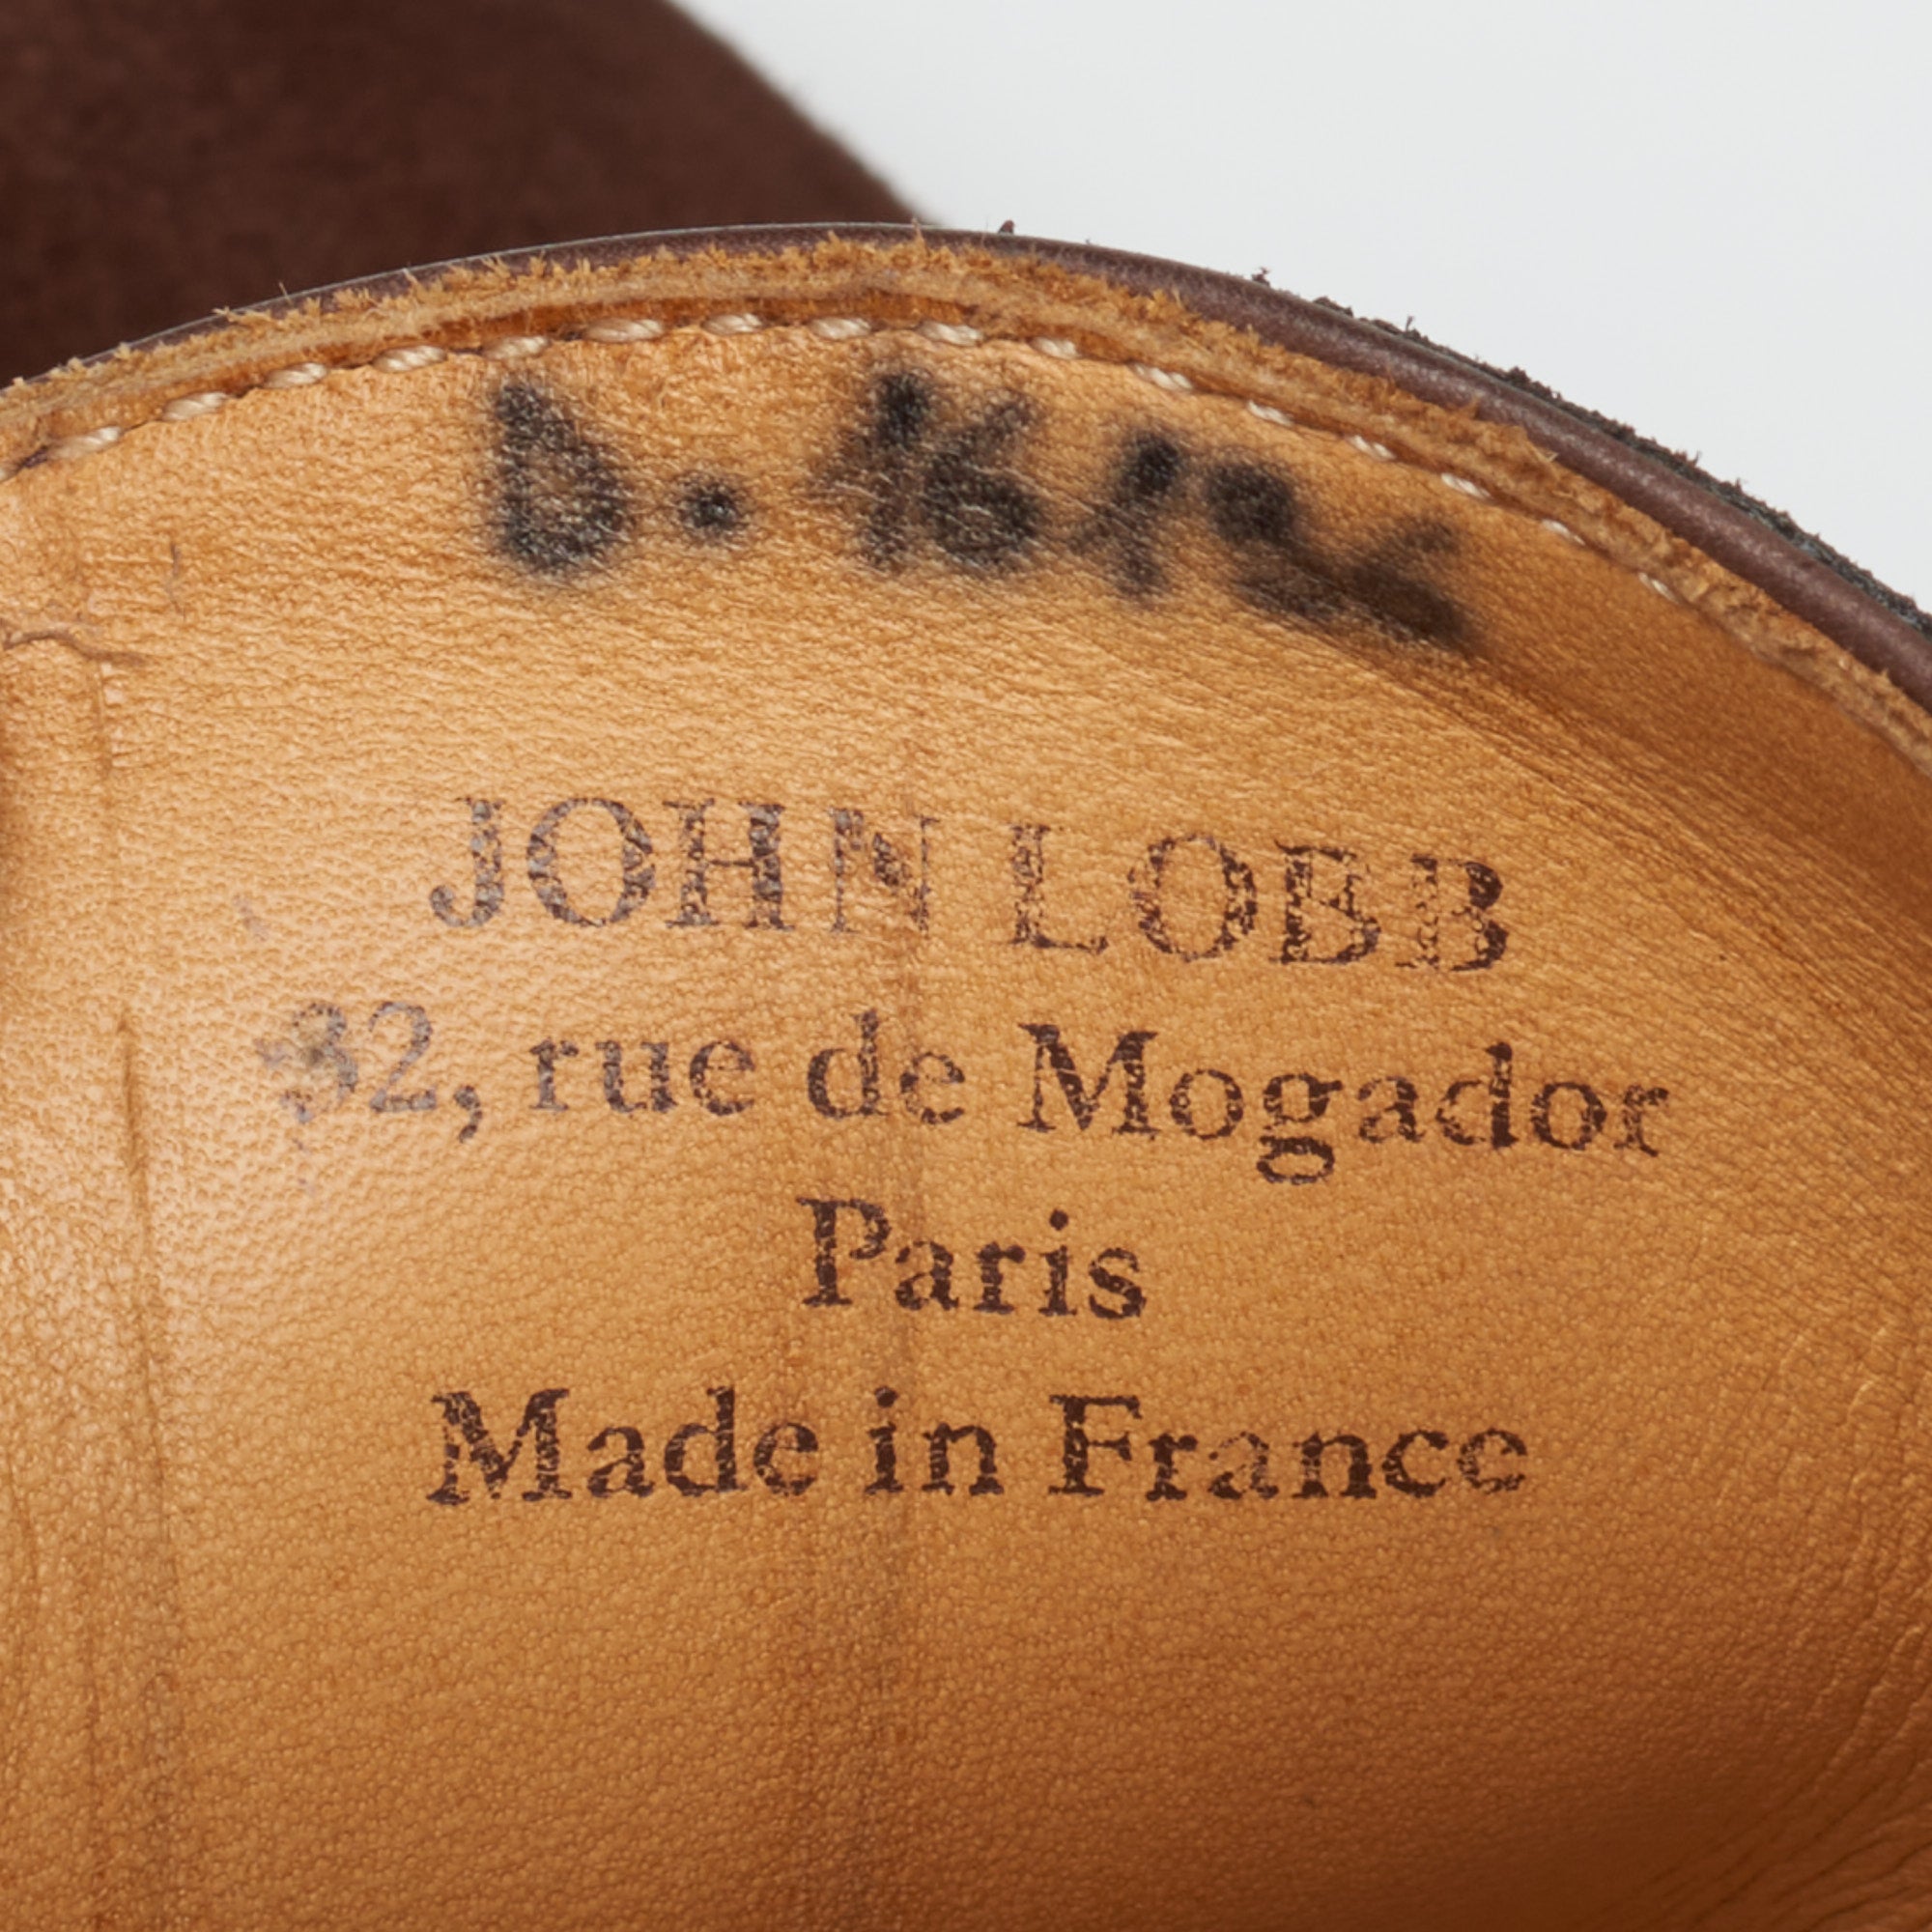 JOHN LOBB Paris Bespoke Brown Suede Leather Chukka Boots Shoes UK 7.5 US 8.5 JOHN LOBB